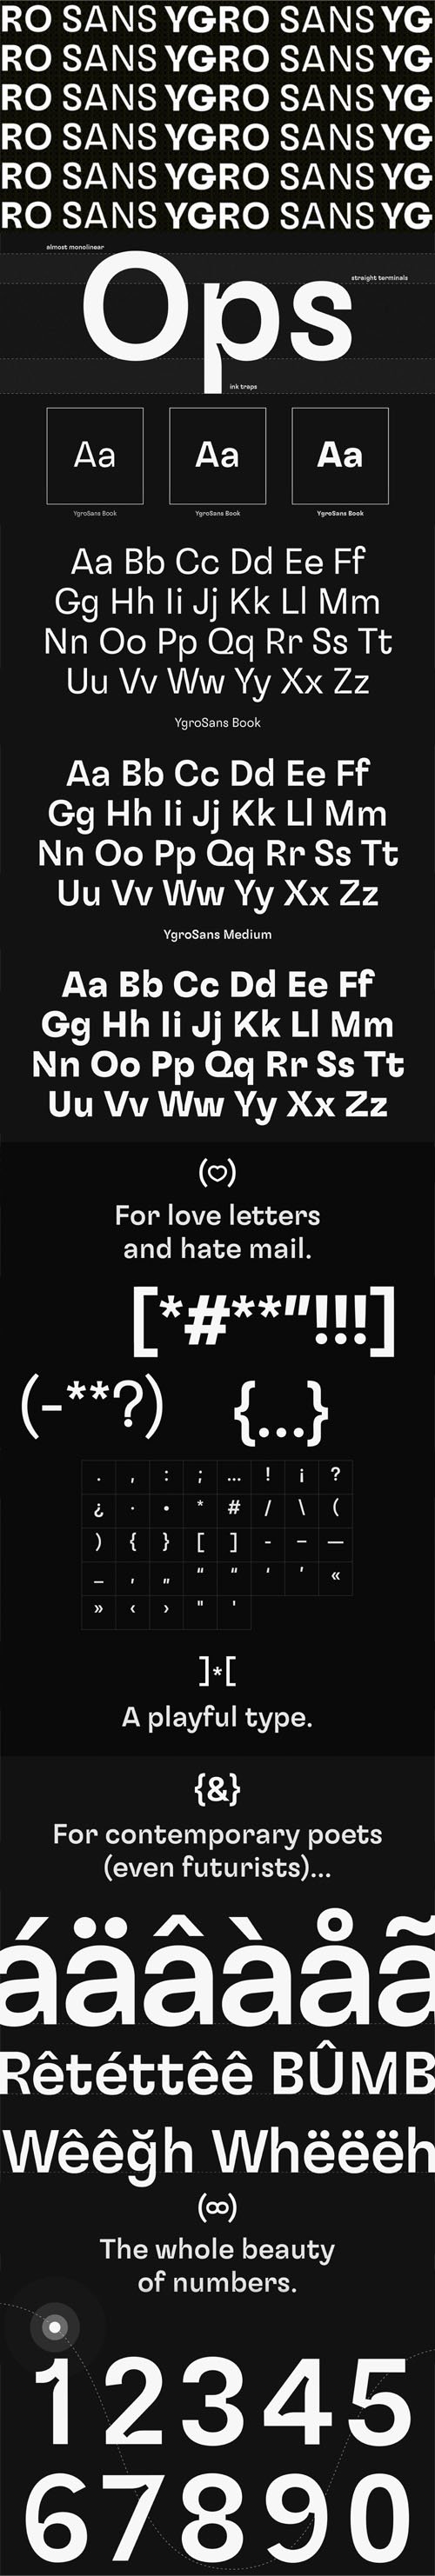 Ygro Sans Serif Font [3-Weights]